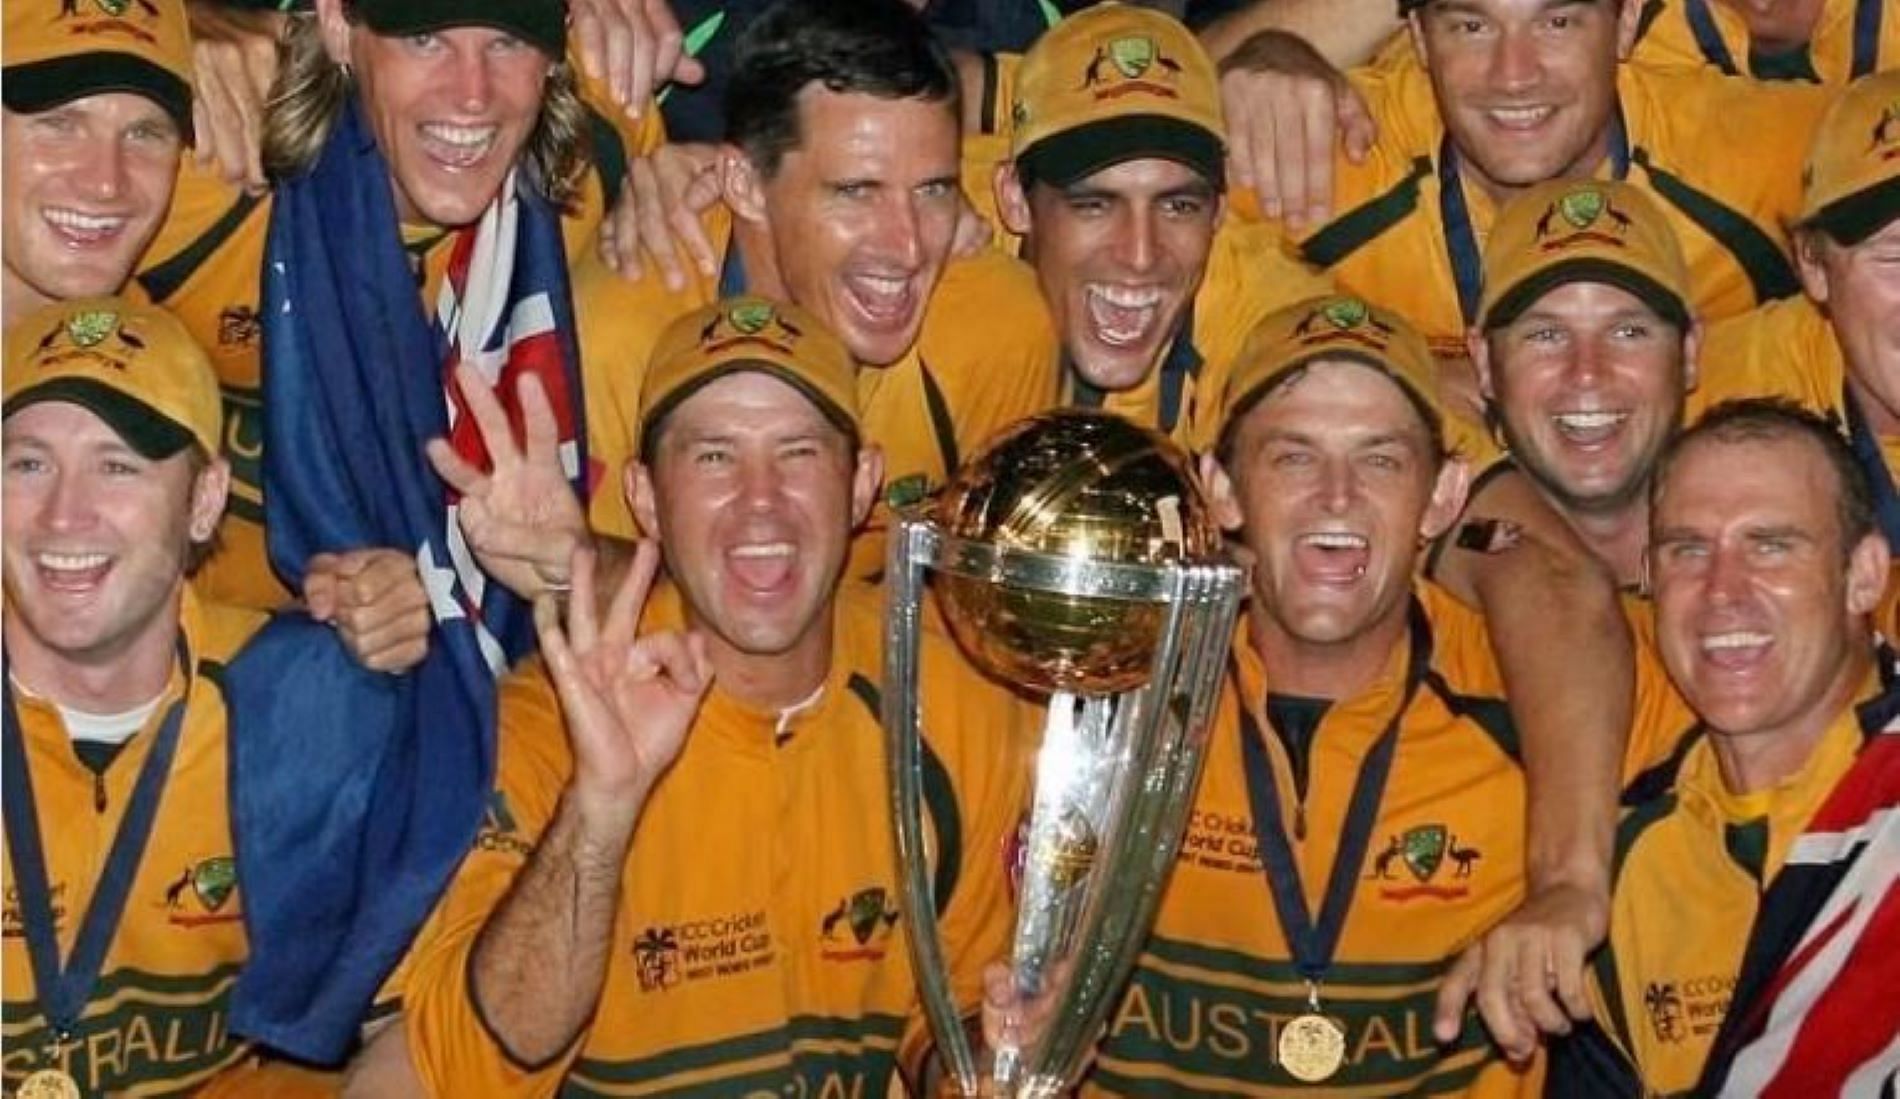 Australia won their third consecutive World Cup title in 2007.